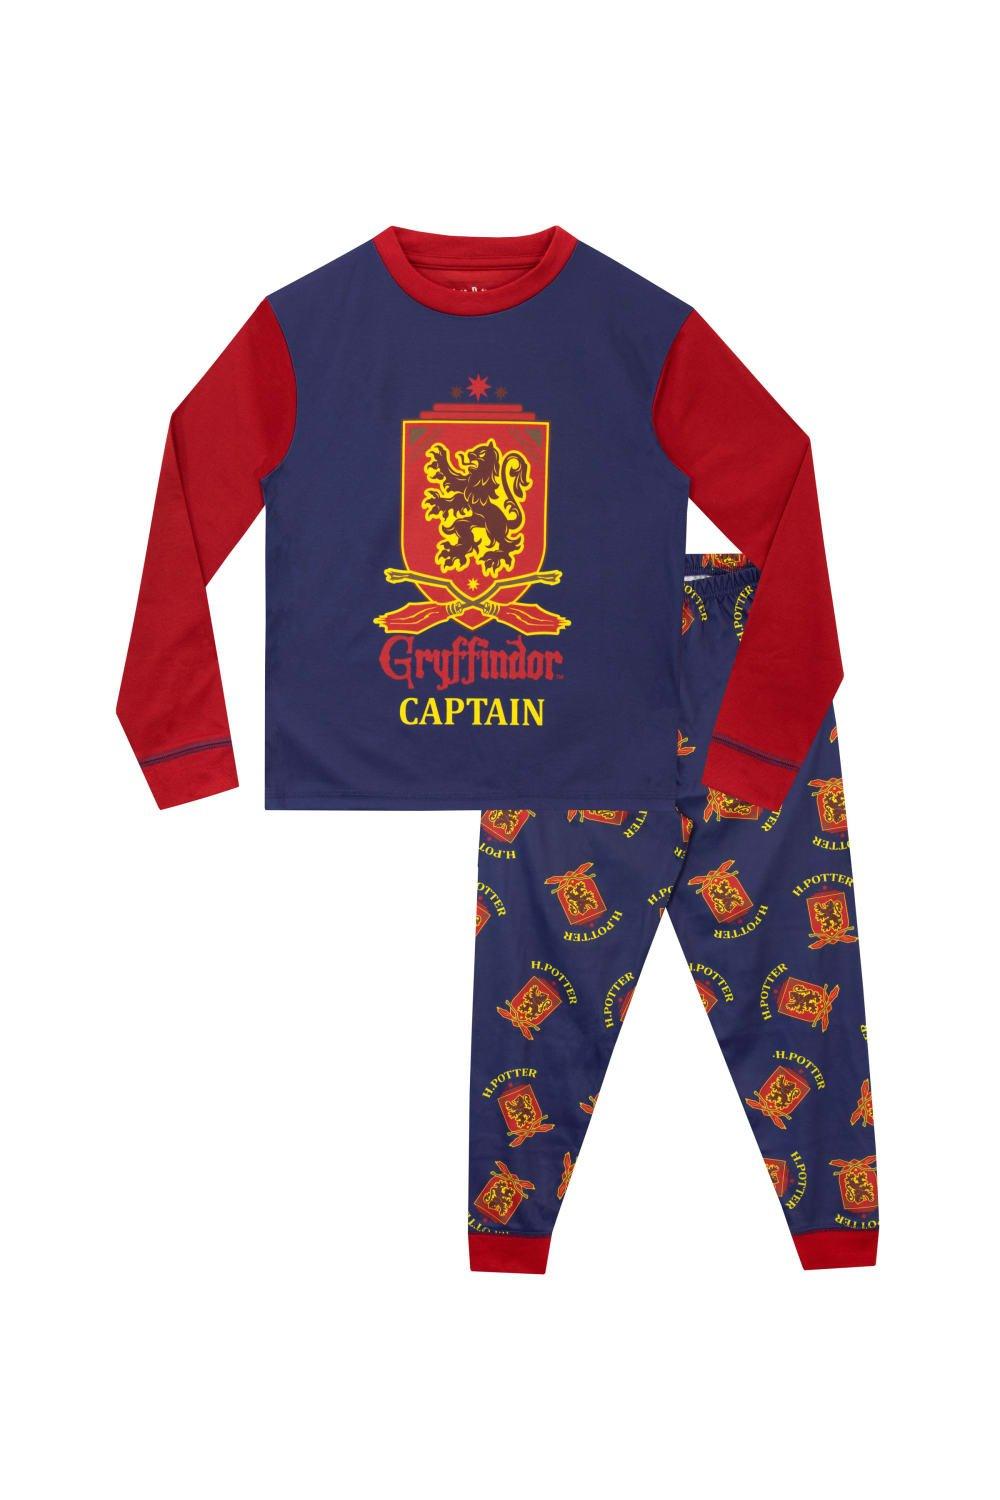 Gryffindor Captain Pyjamas